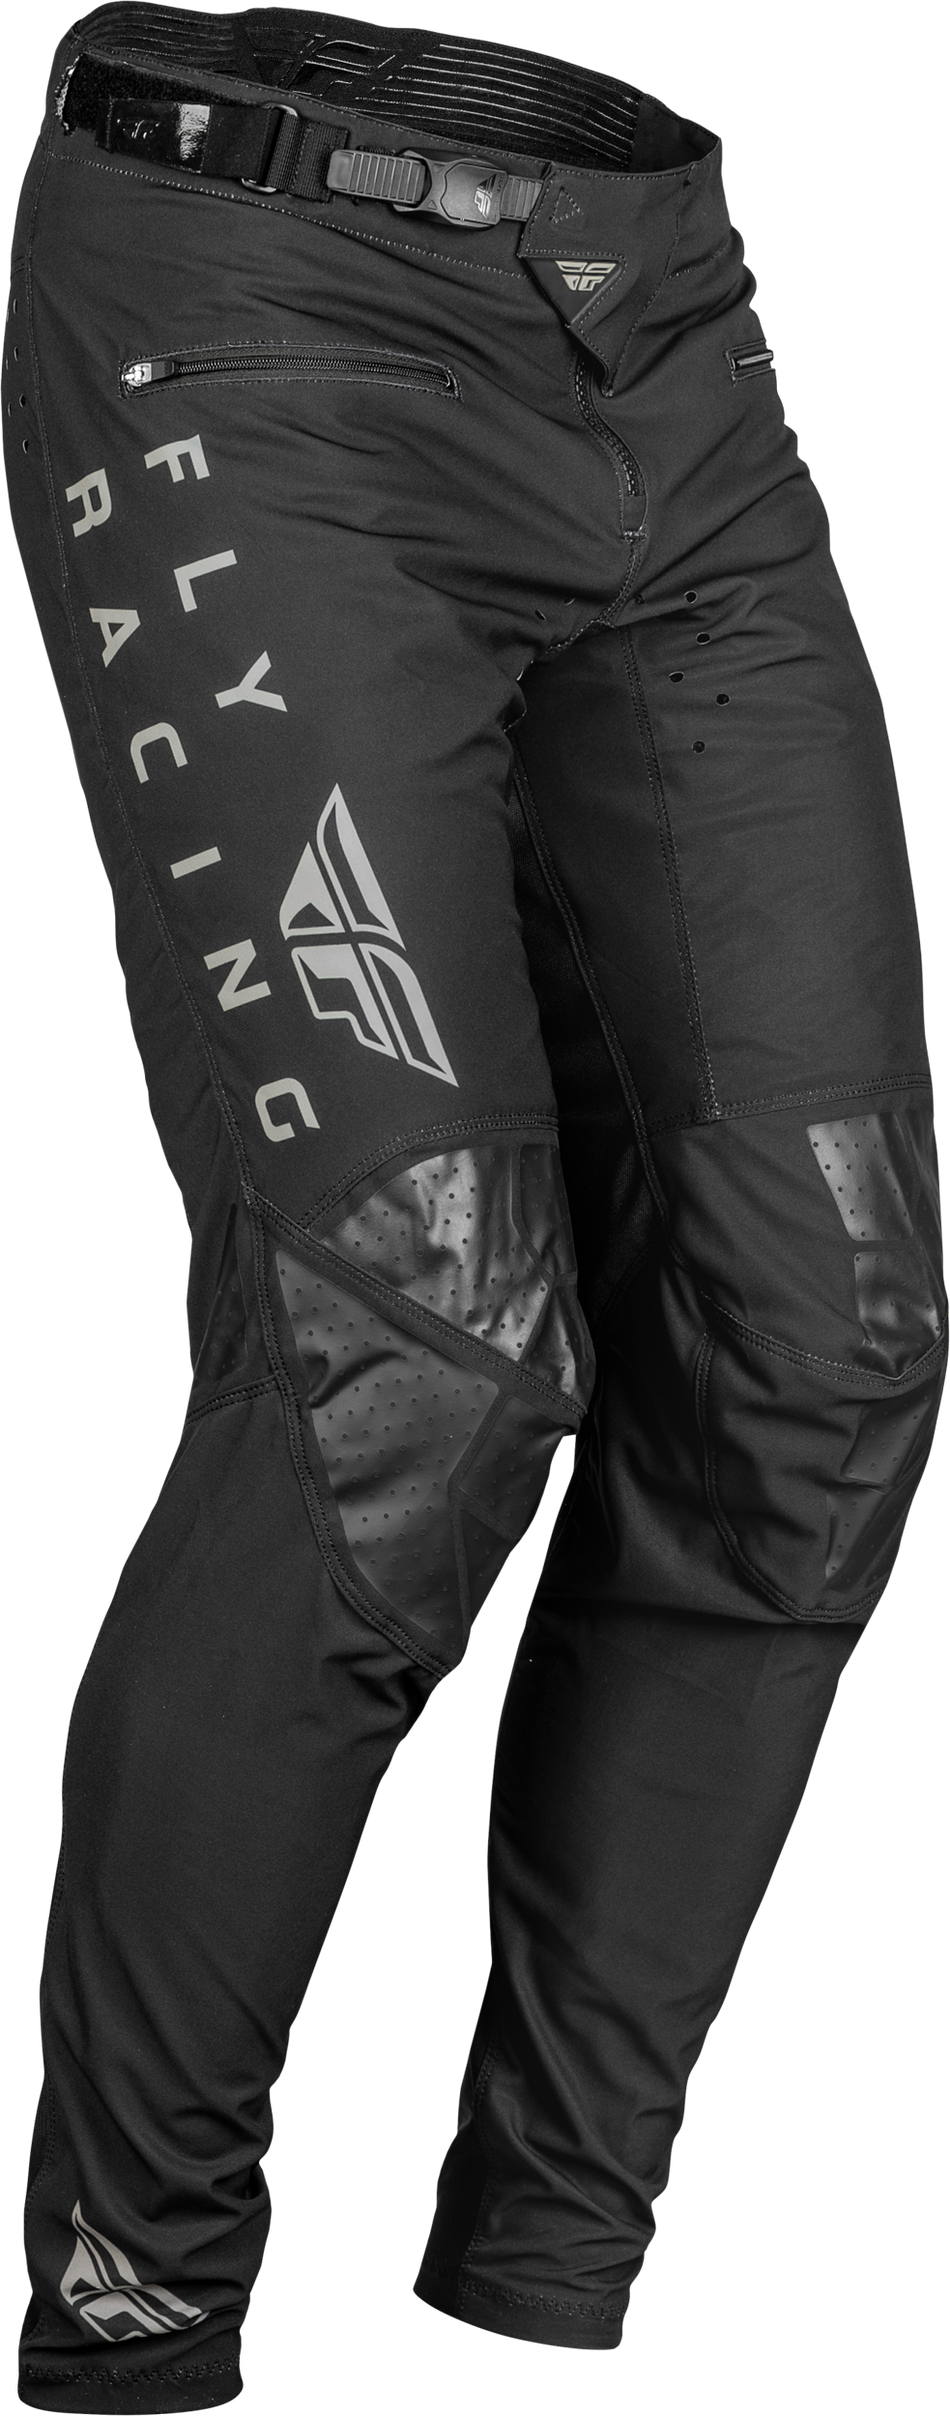 FLY RACING Youth Radium Bicycle Pants Black/Grey Sz 20 376-04020